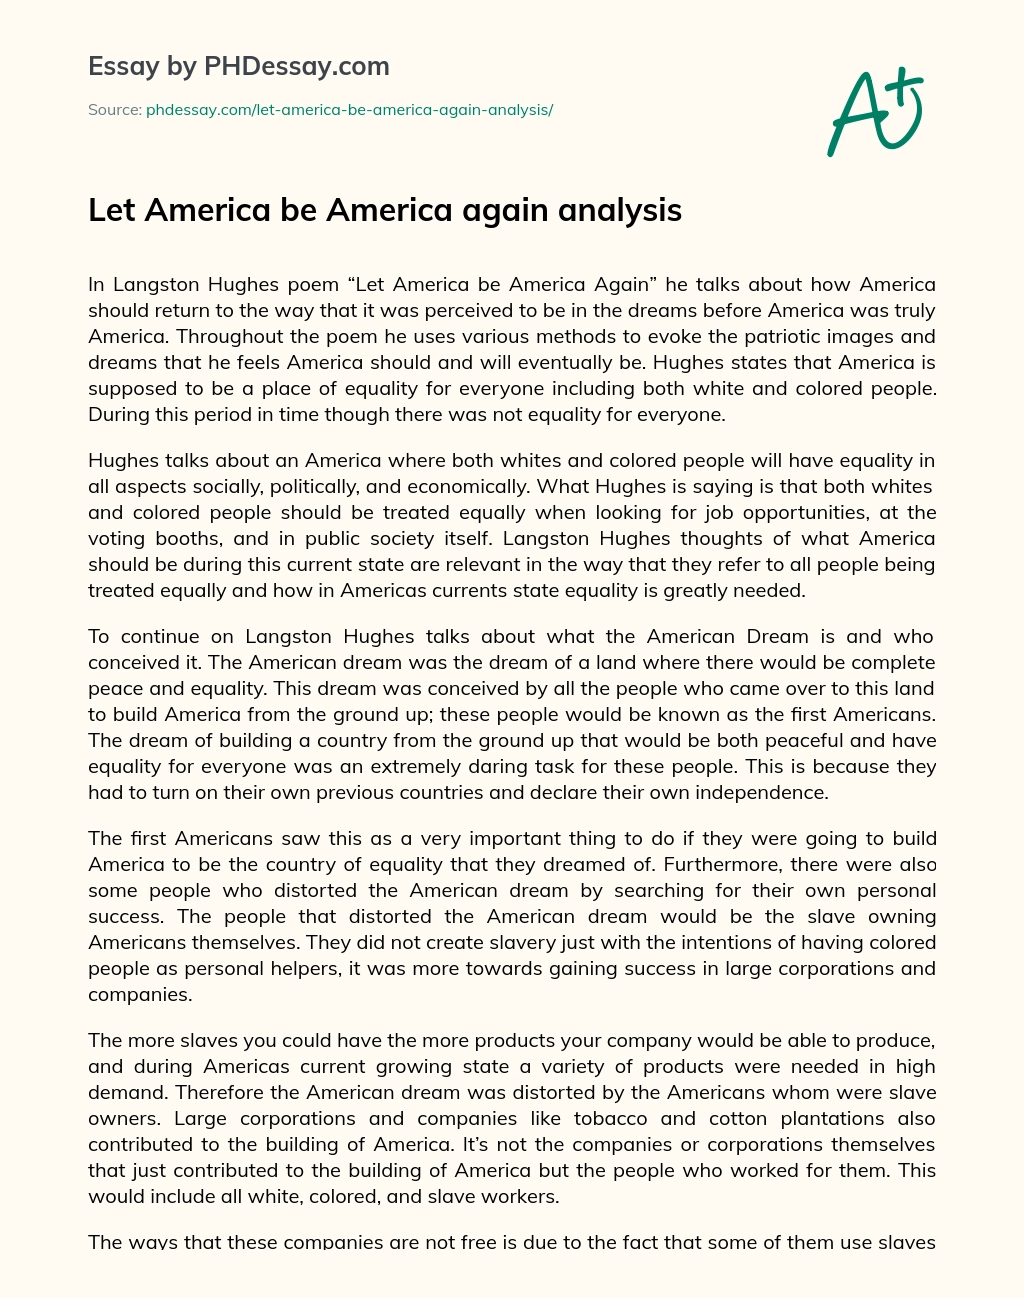 Let America be America again analysis essay